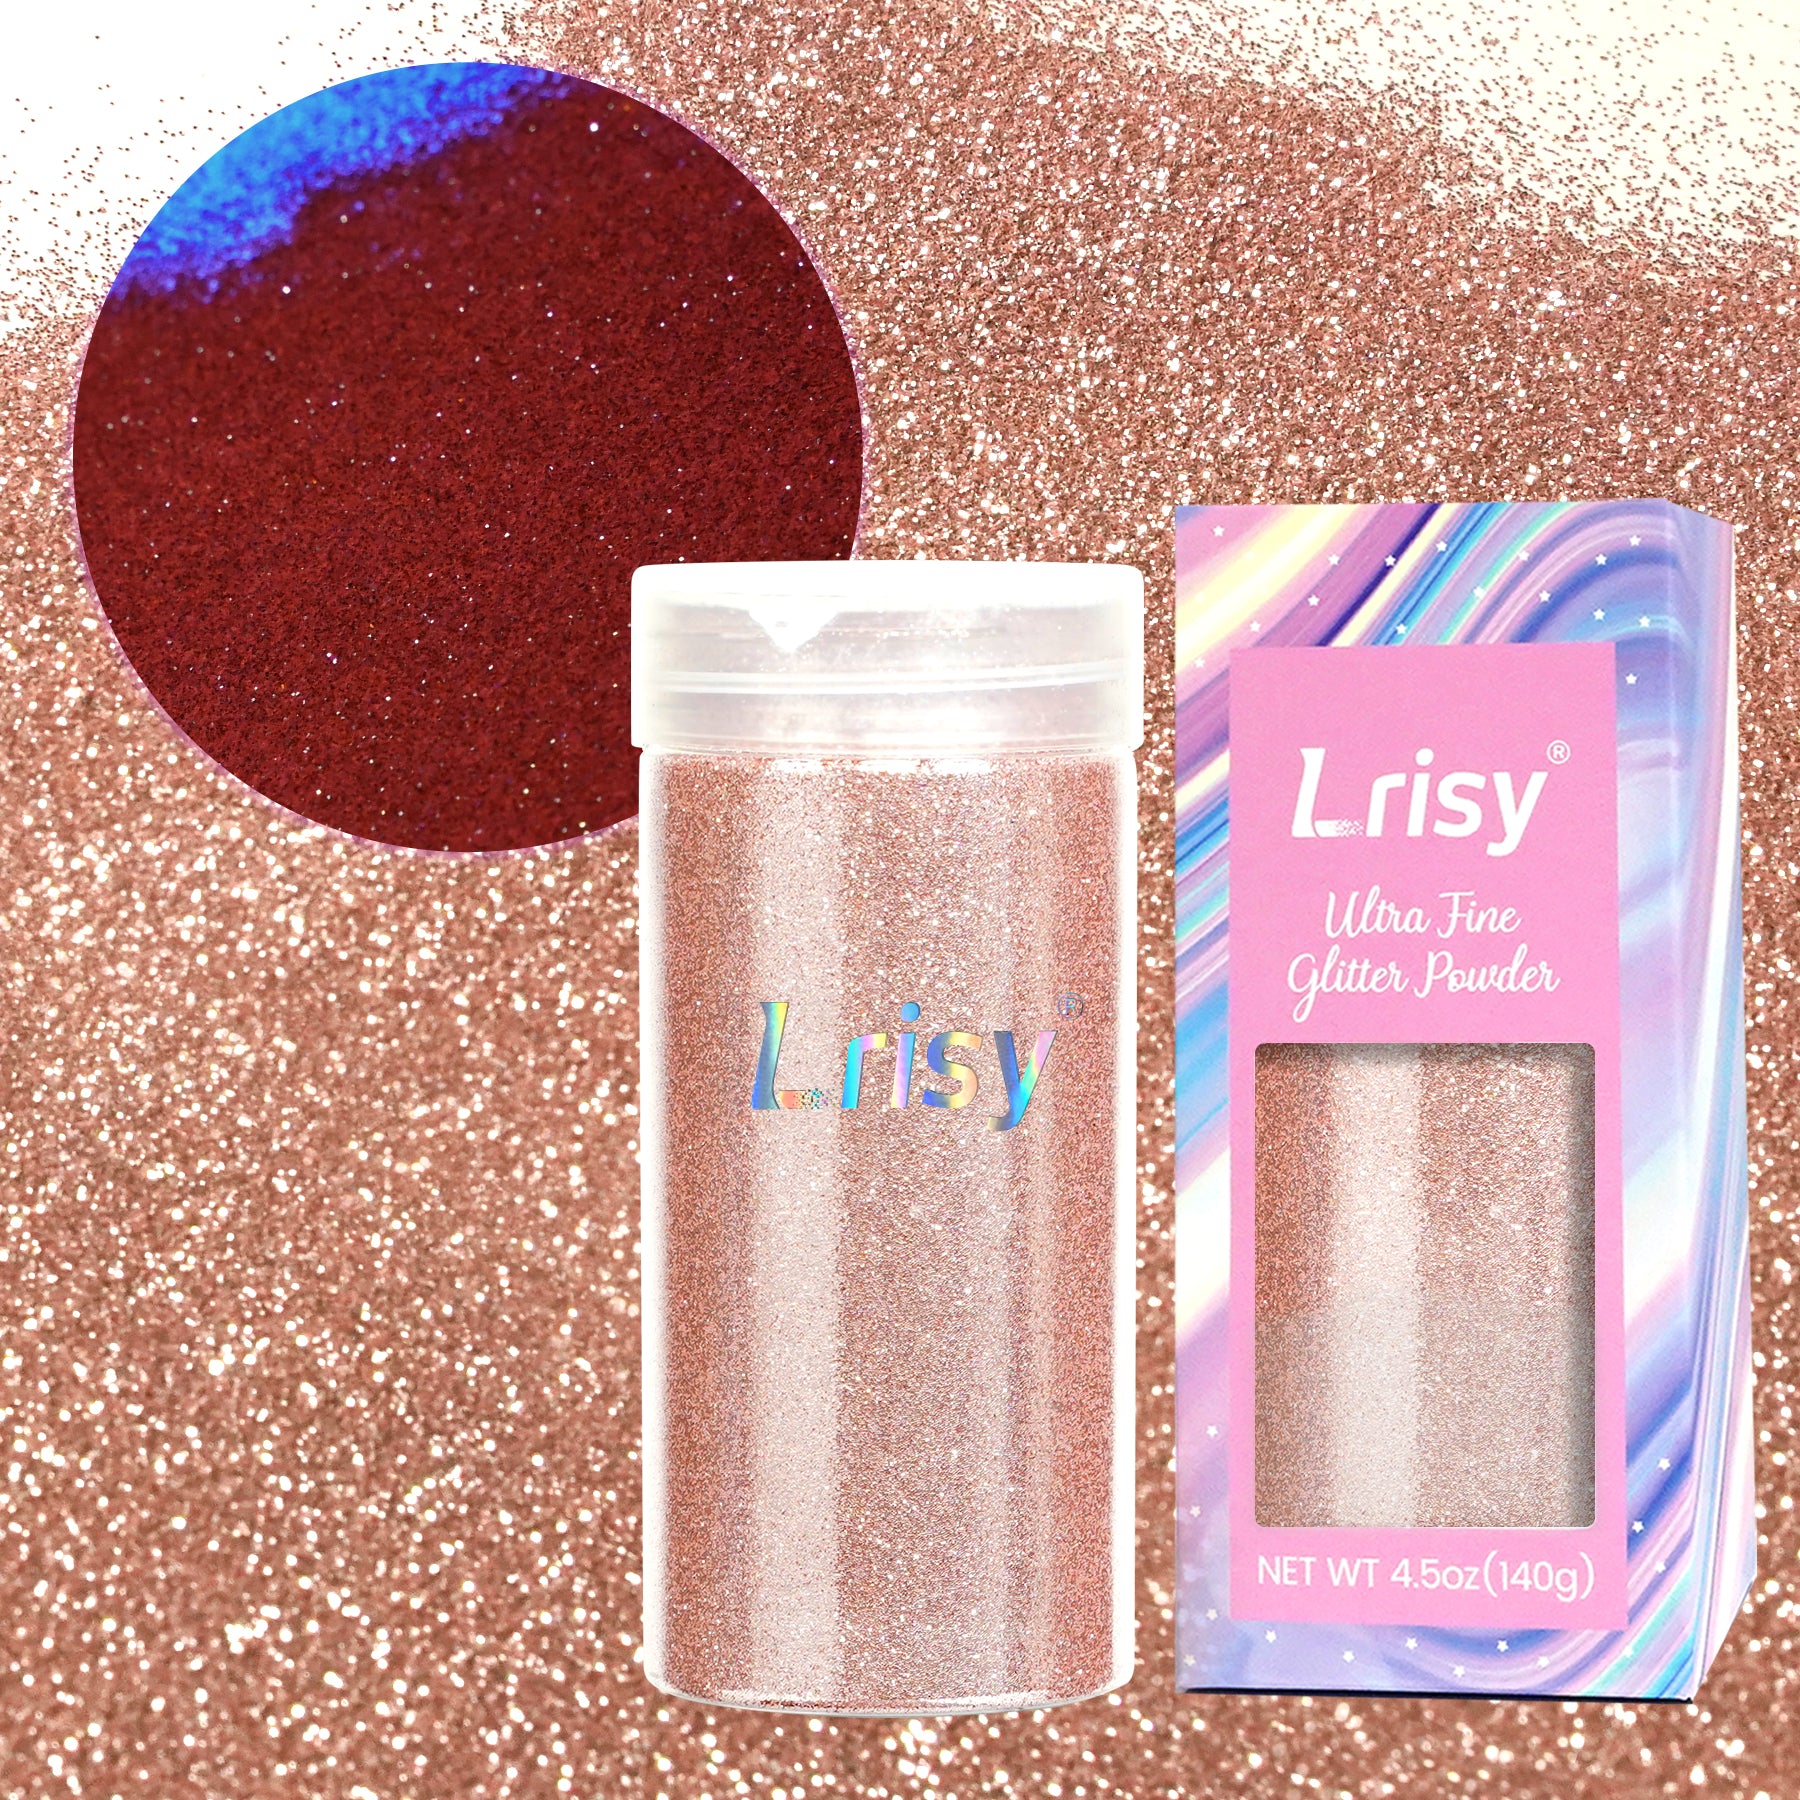 Lrisy Extra Fine Neon Punk Metallic Glitter Powder with Shaker Lid 140g/4.5oz (Punk Pearl Pink)